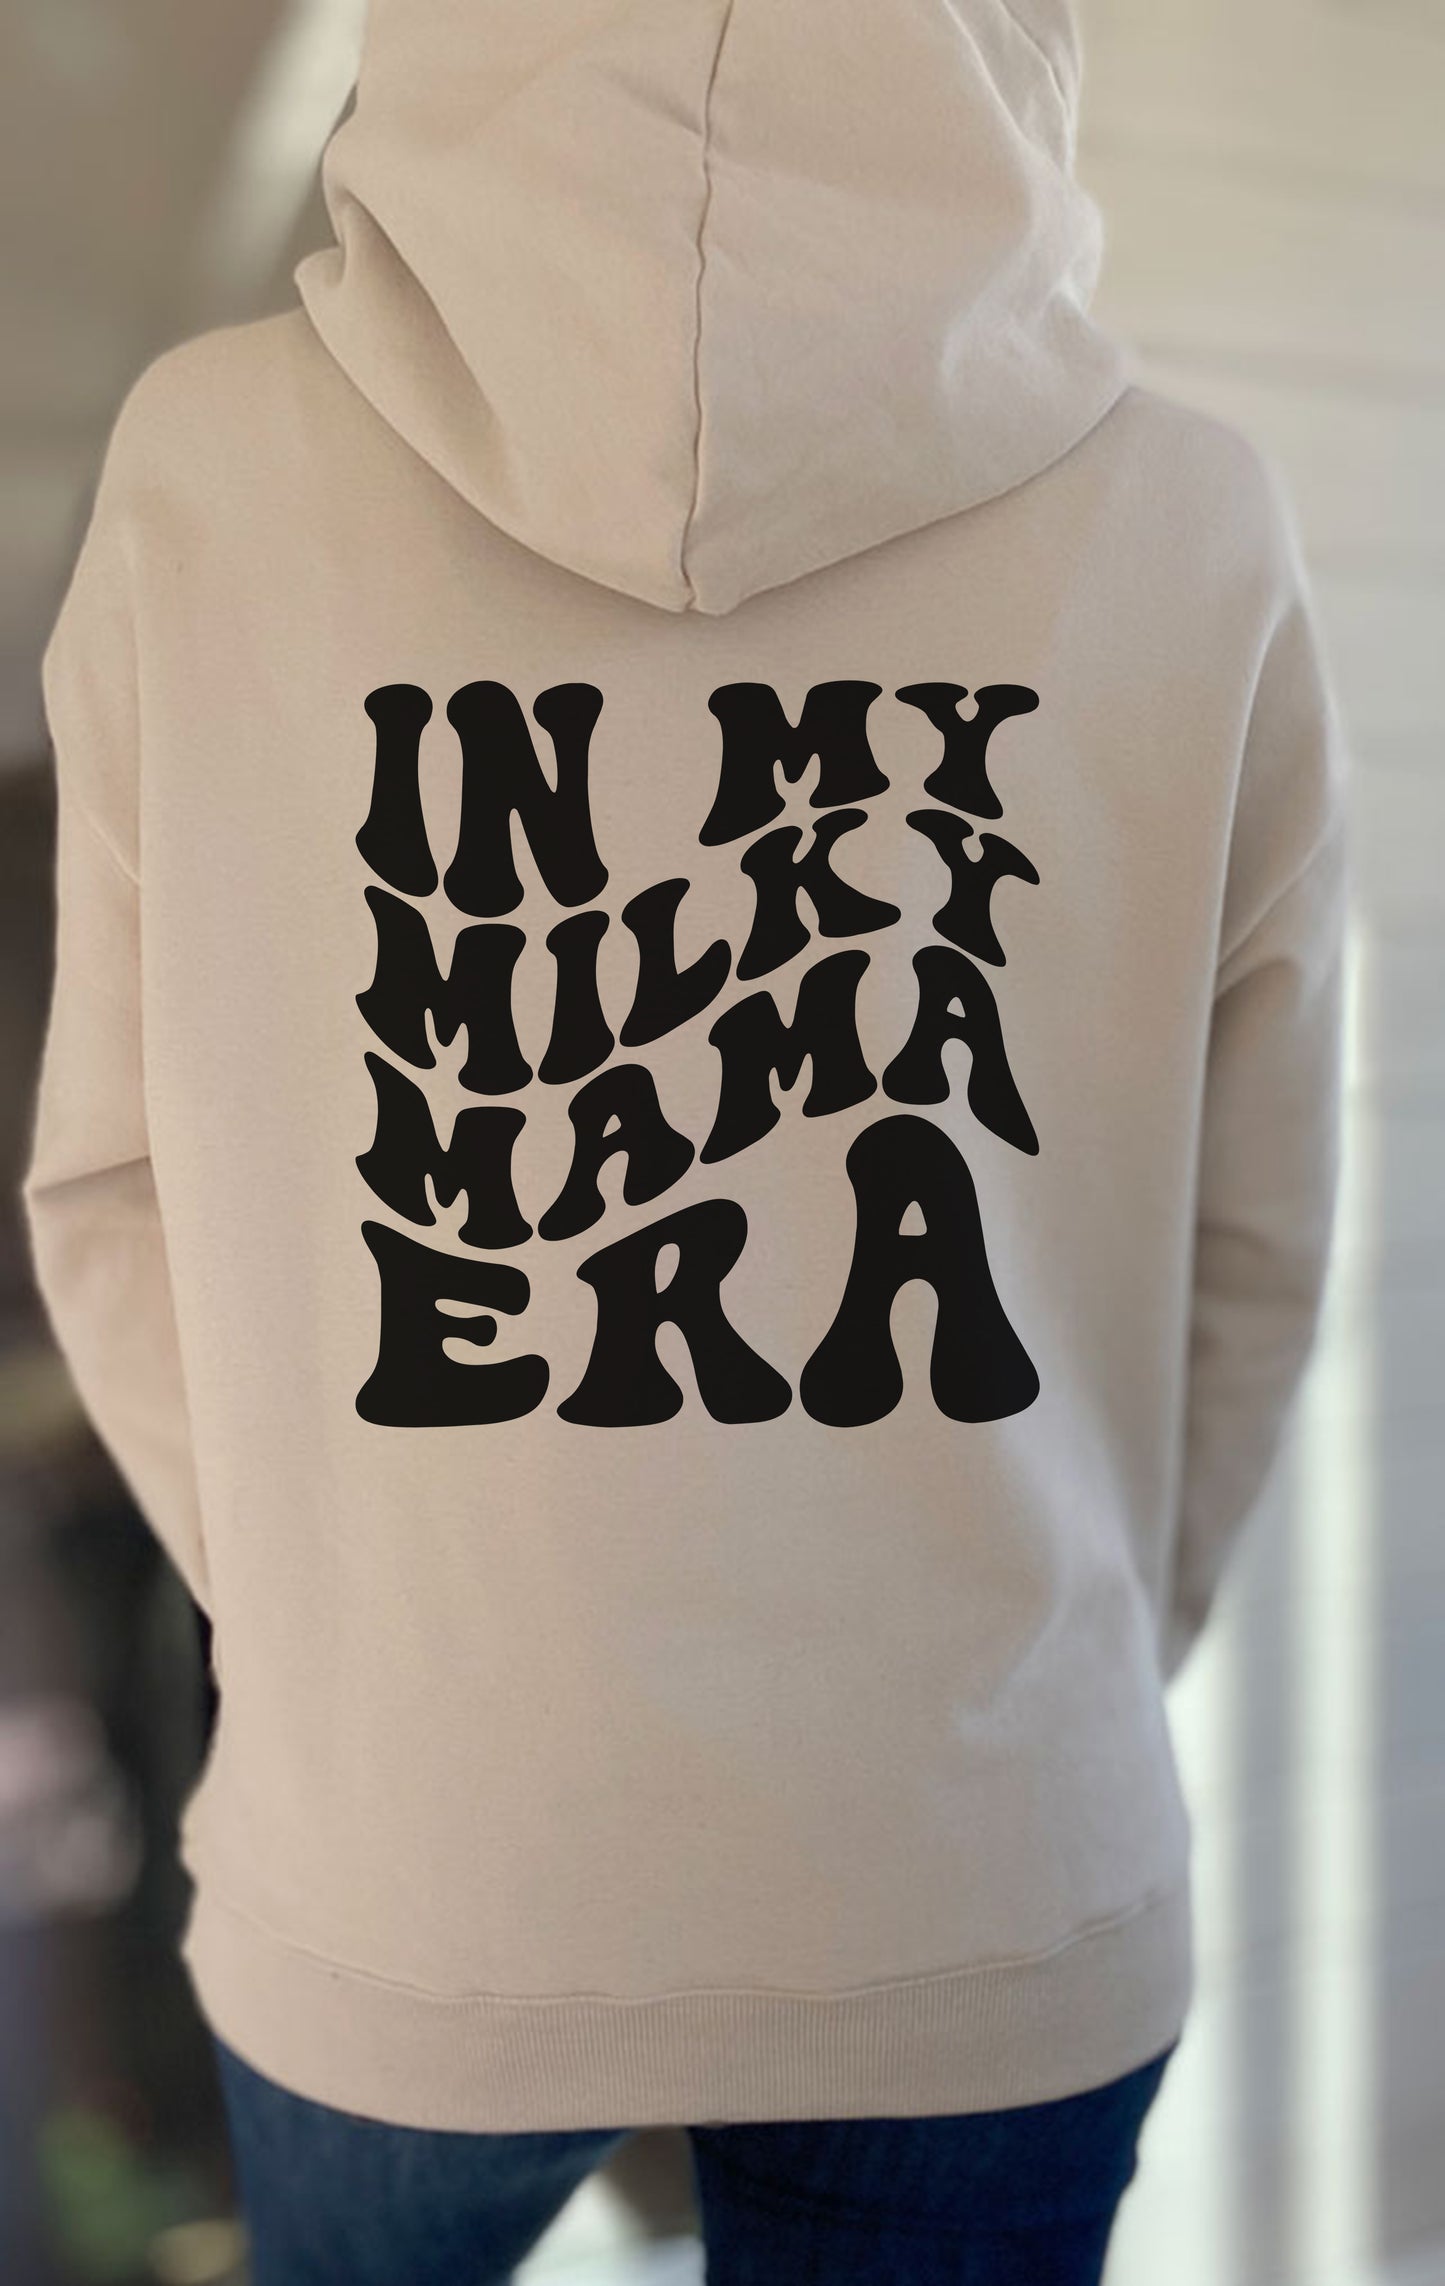 In My Milky Mama Era Hooded Sweatshirt